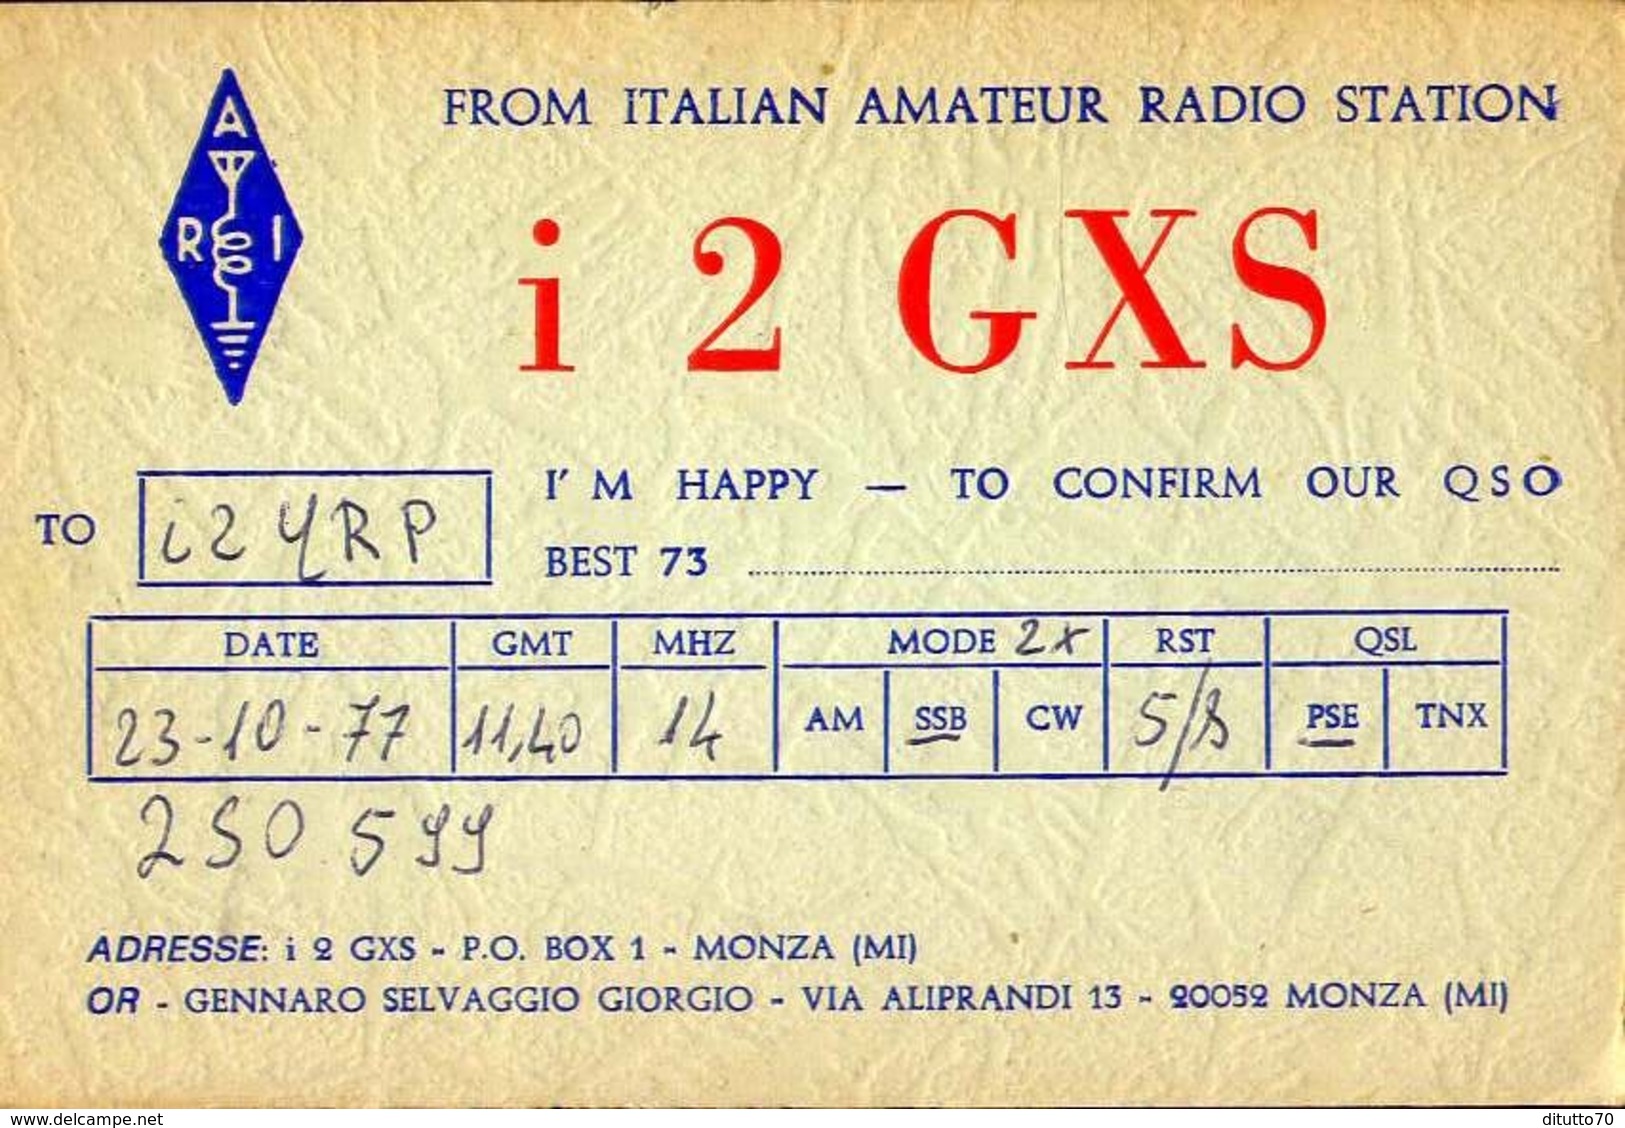 Radio - From Italian Amateur Radio Station - I2gxs - Monza - Radio-amateur